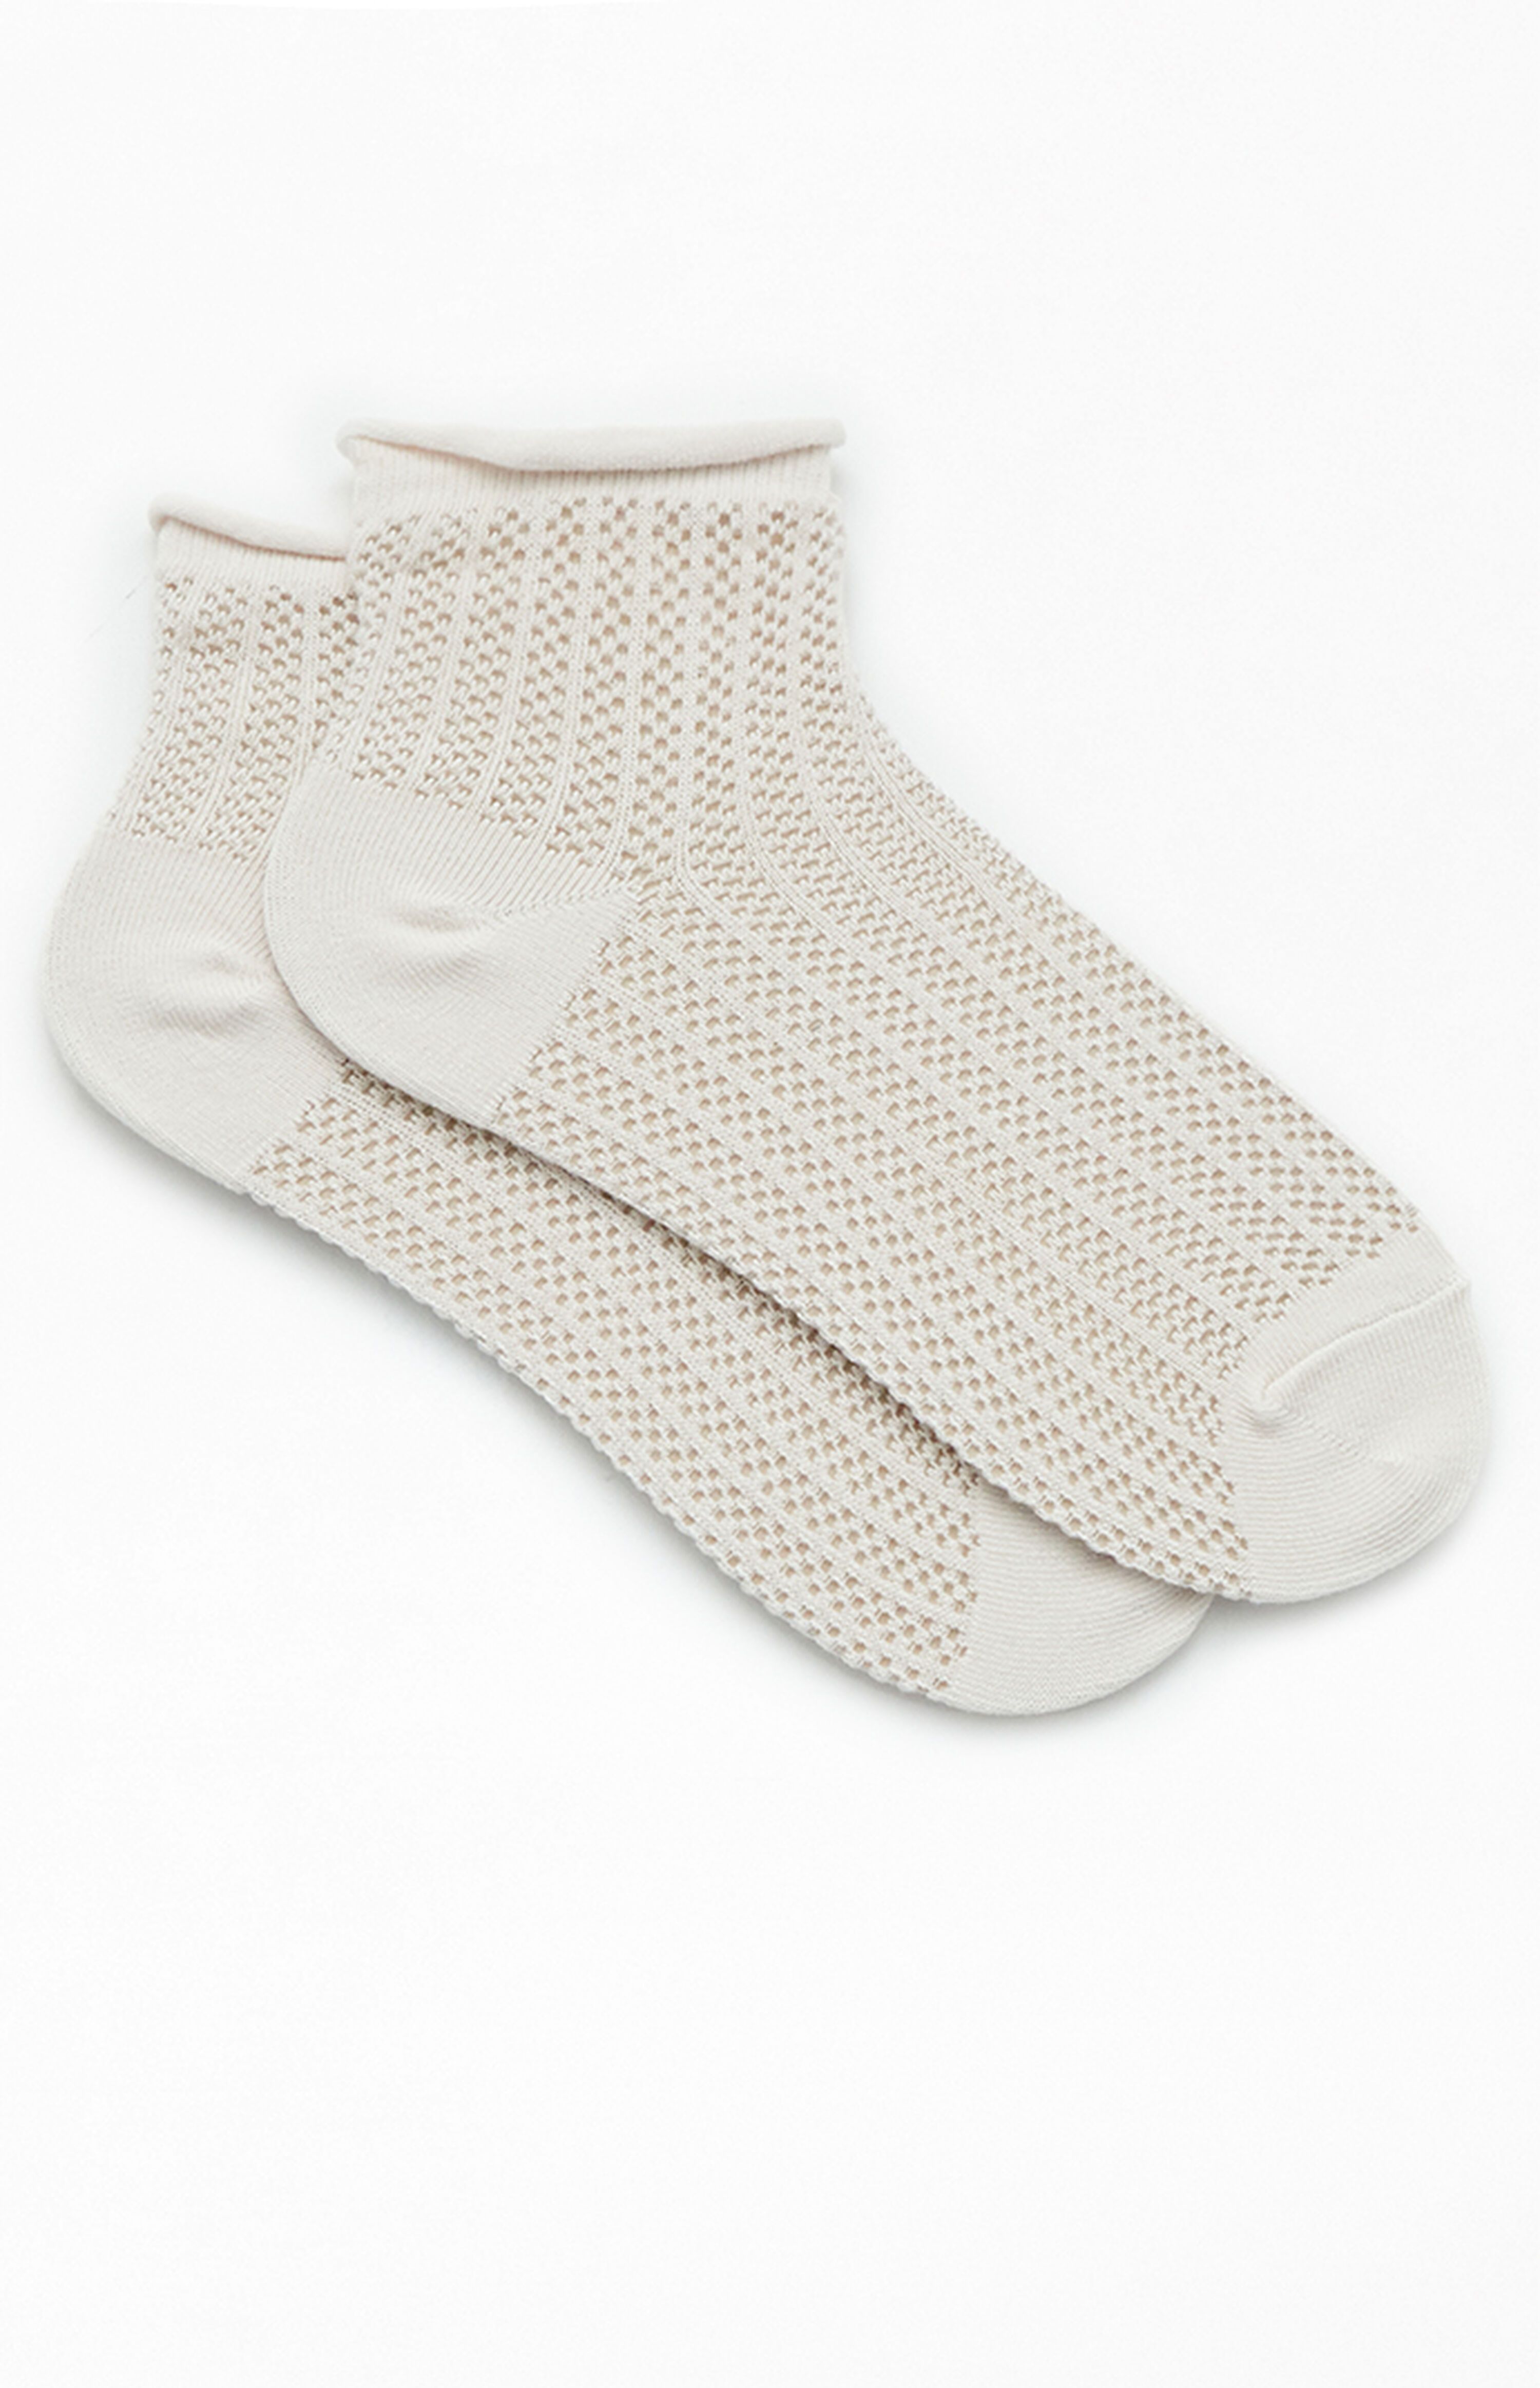 PacSun Knit Mesh Ankle Socks | PacSun